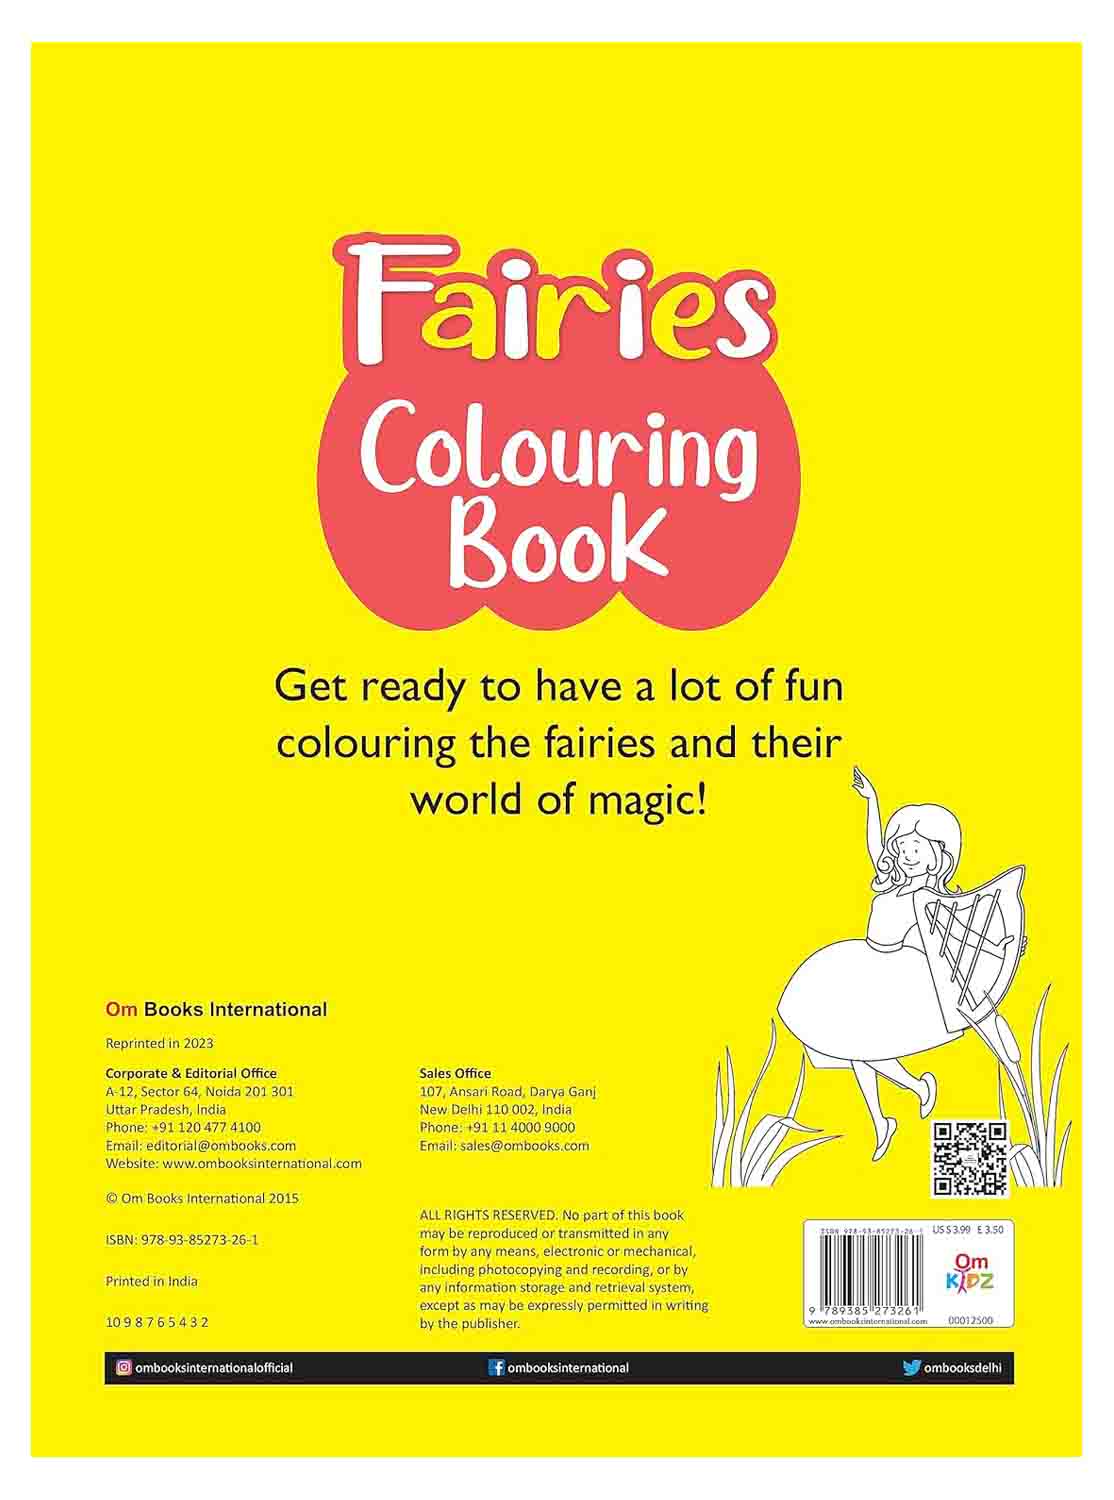 Om Books International Fairies Colouring book- Copy Colouring books - ‎ 9789385273261